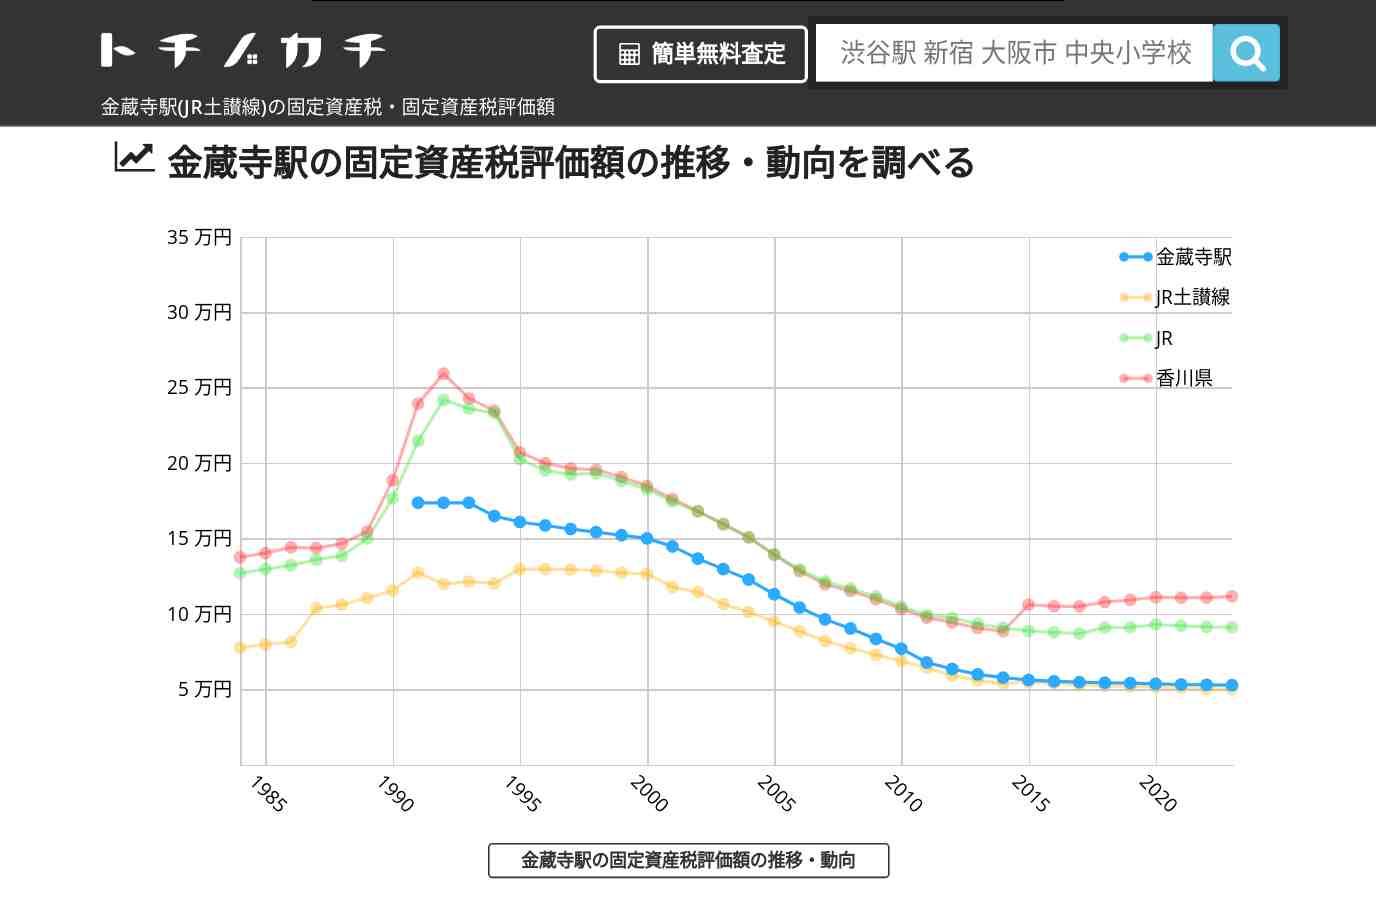 金蔵寺駅(JR土讃線)の固定資産税・固定資産税評価額 | トチノカチ